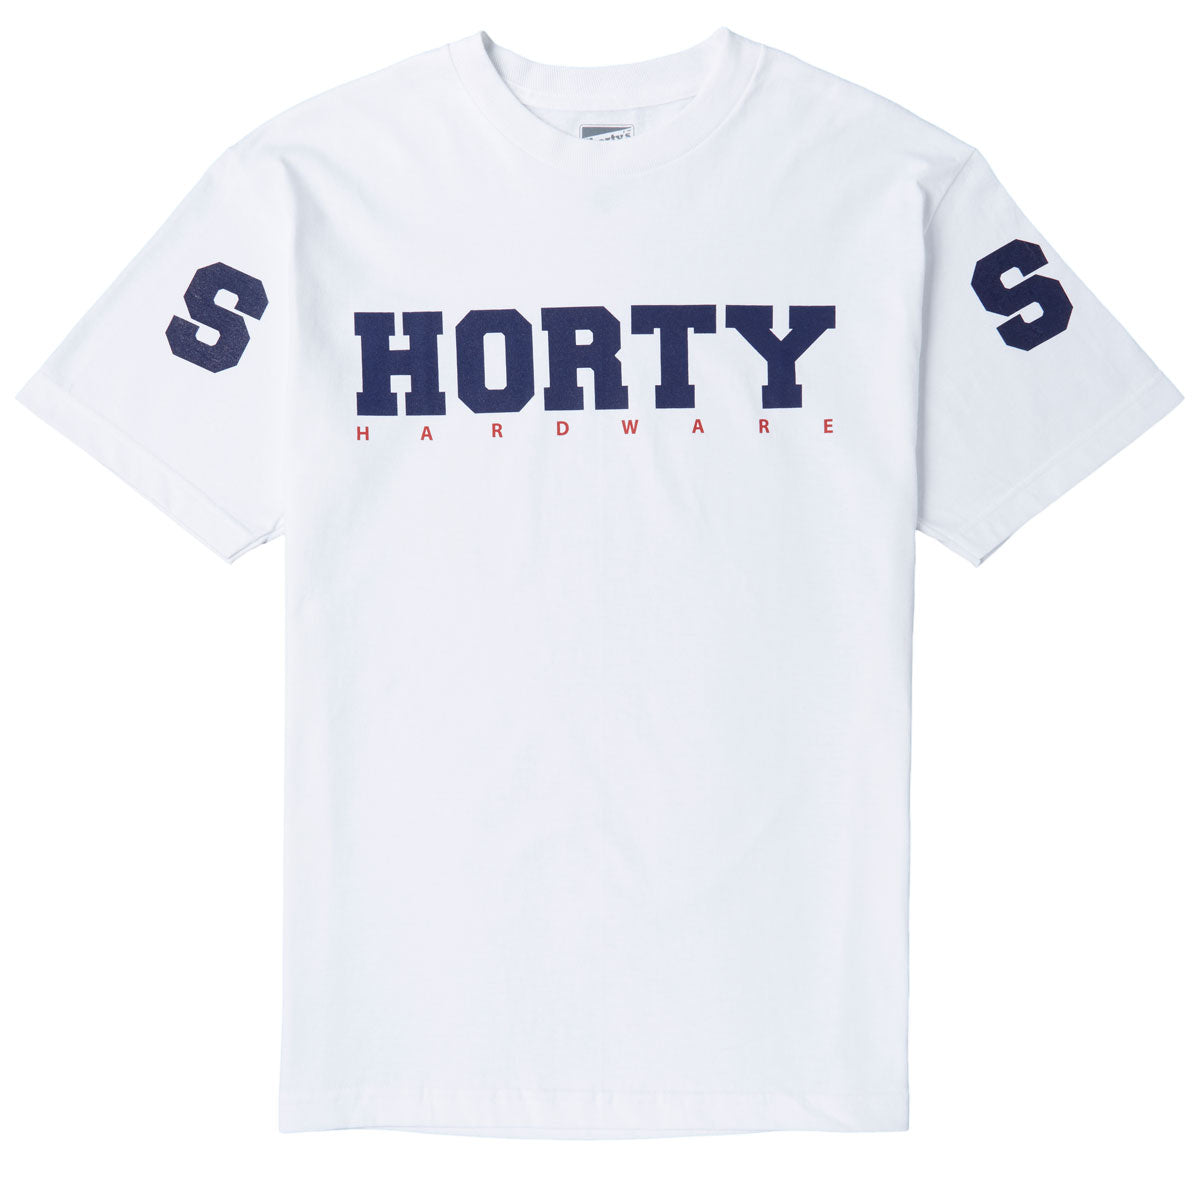 Shorty's S-horty-S T-Shirt - White image 1